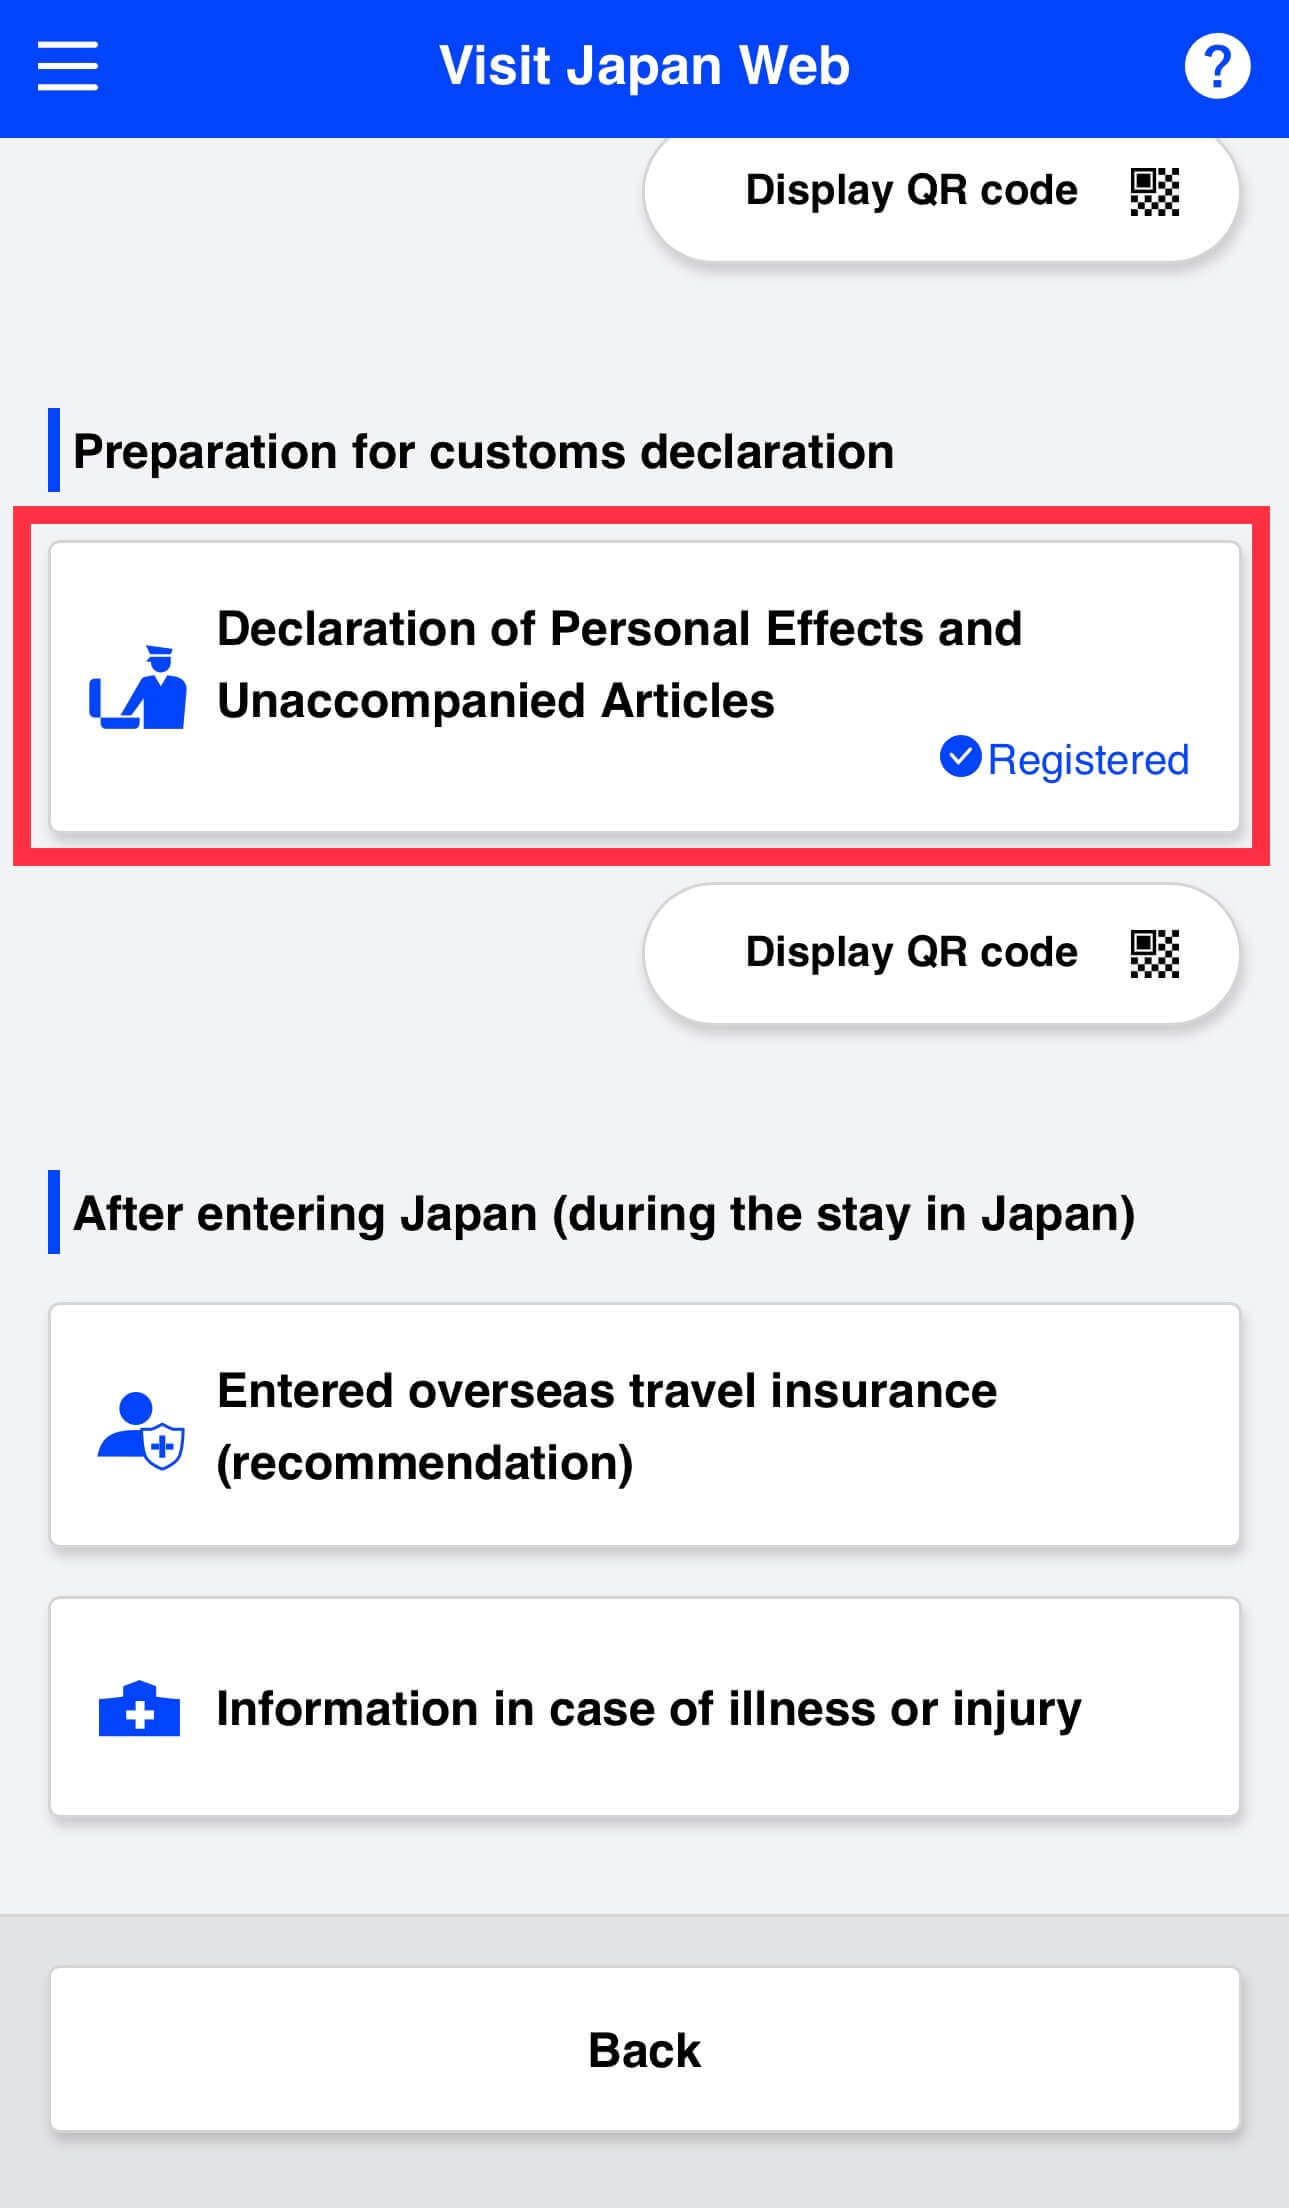 visit japan web upload vaccine certificate